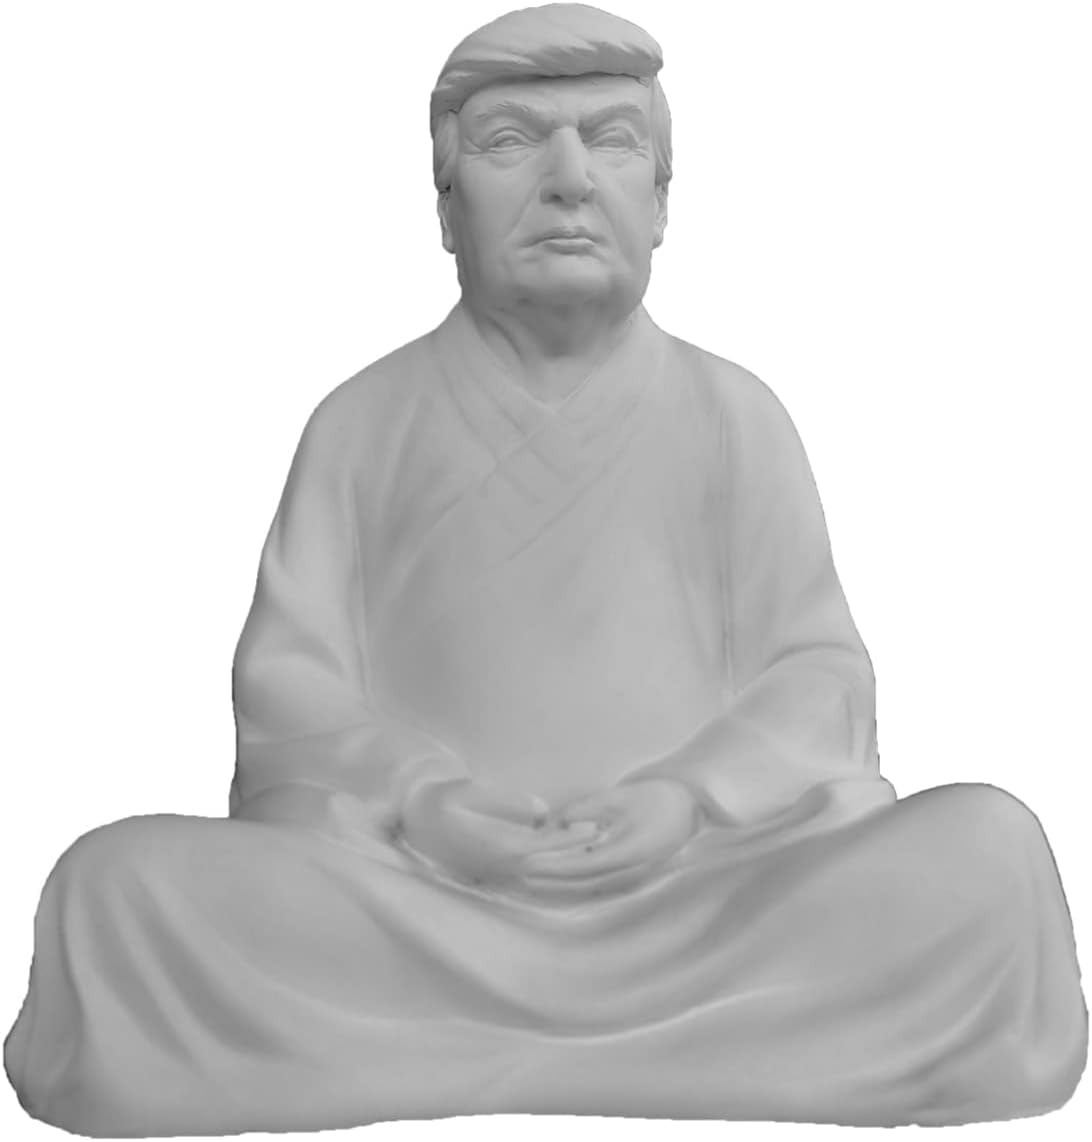 Trump Buddha, Donald Trump Statue, Former President Donald Trump Resin Statue,